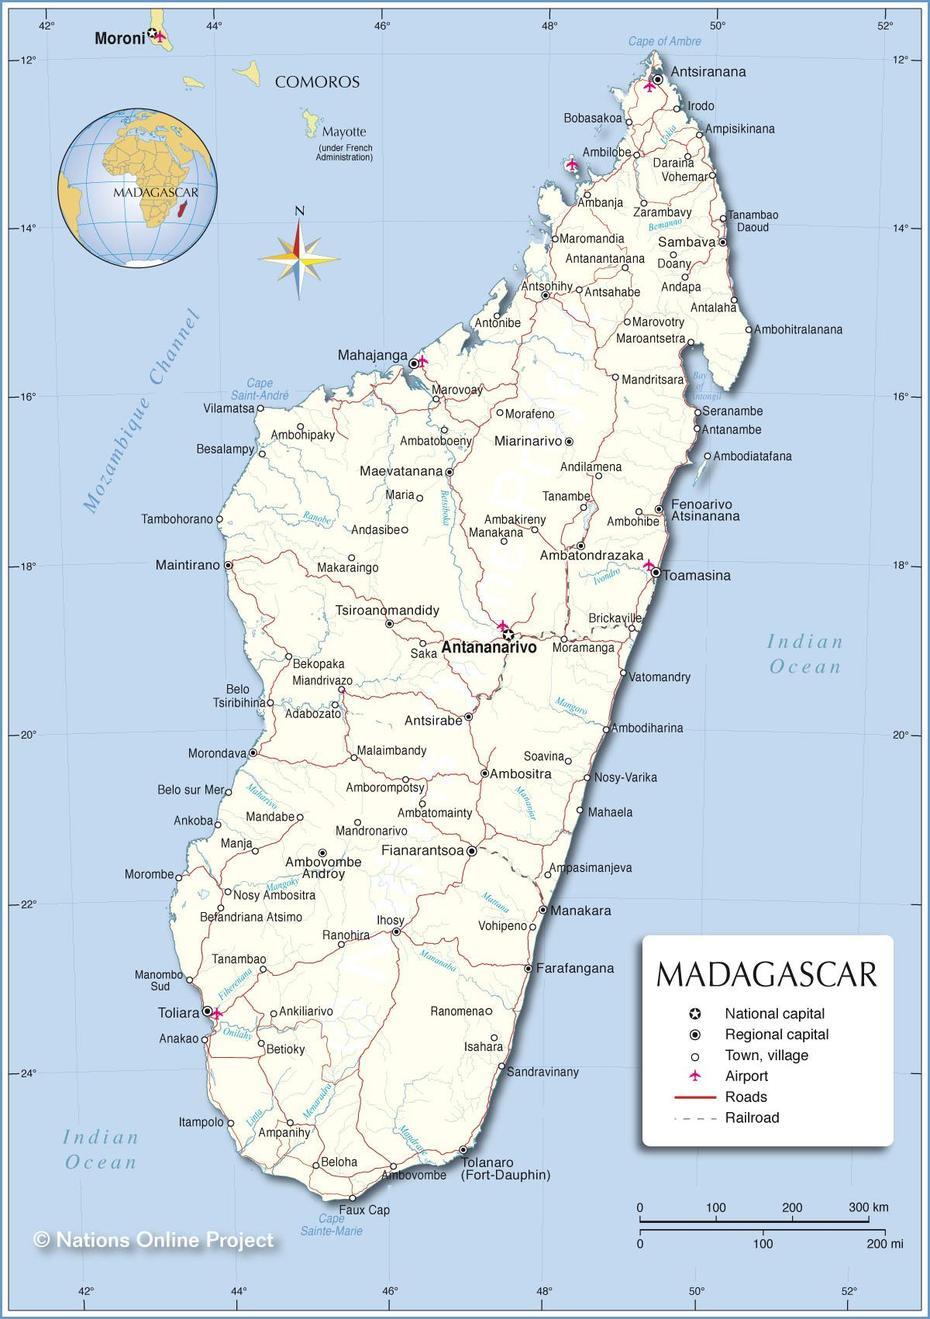 Fianarantsoa Madagascar, Toamasina Madagascar, Madagascar, Ambanja, Madagascar